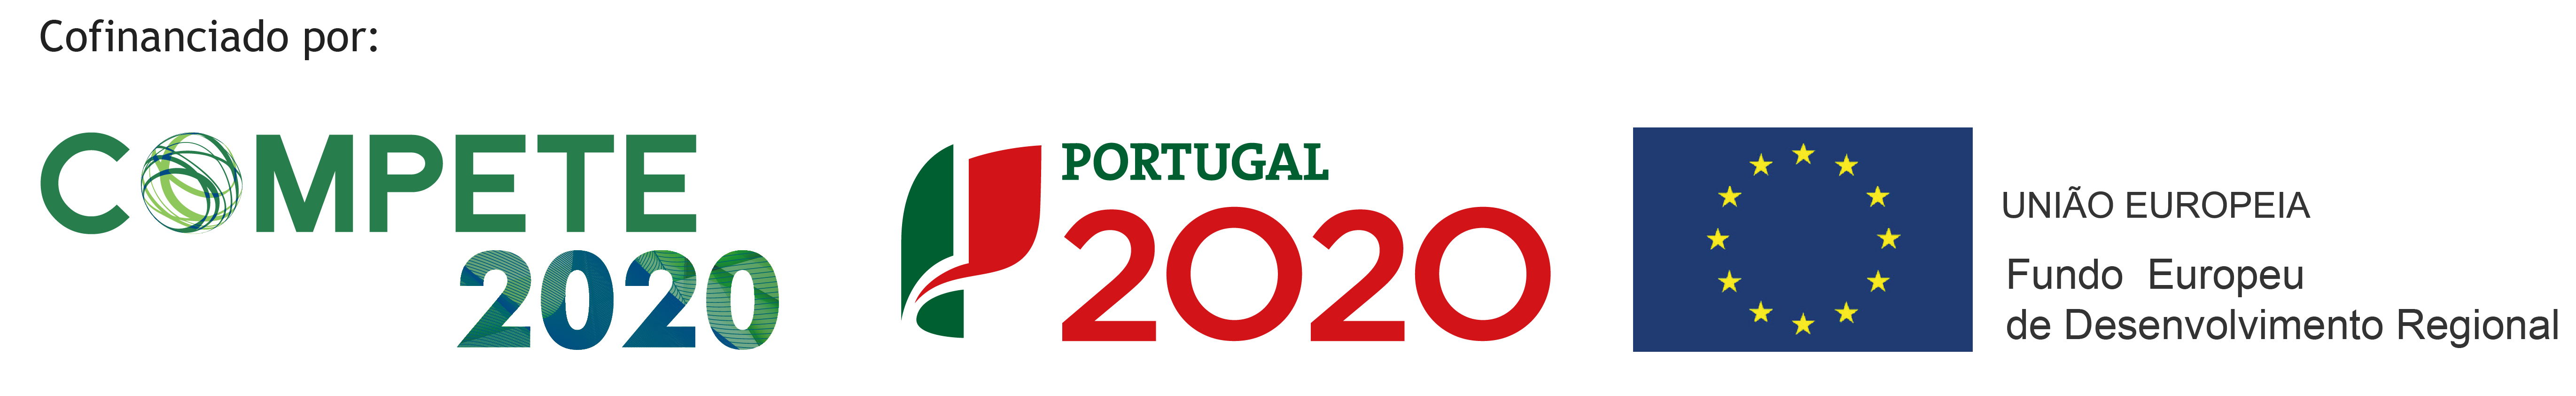 logotipos compete2020 portugal 2020